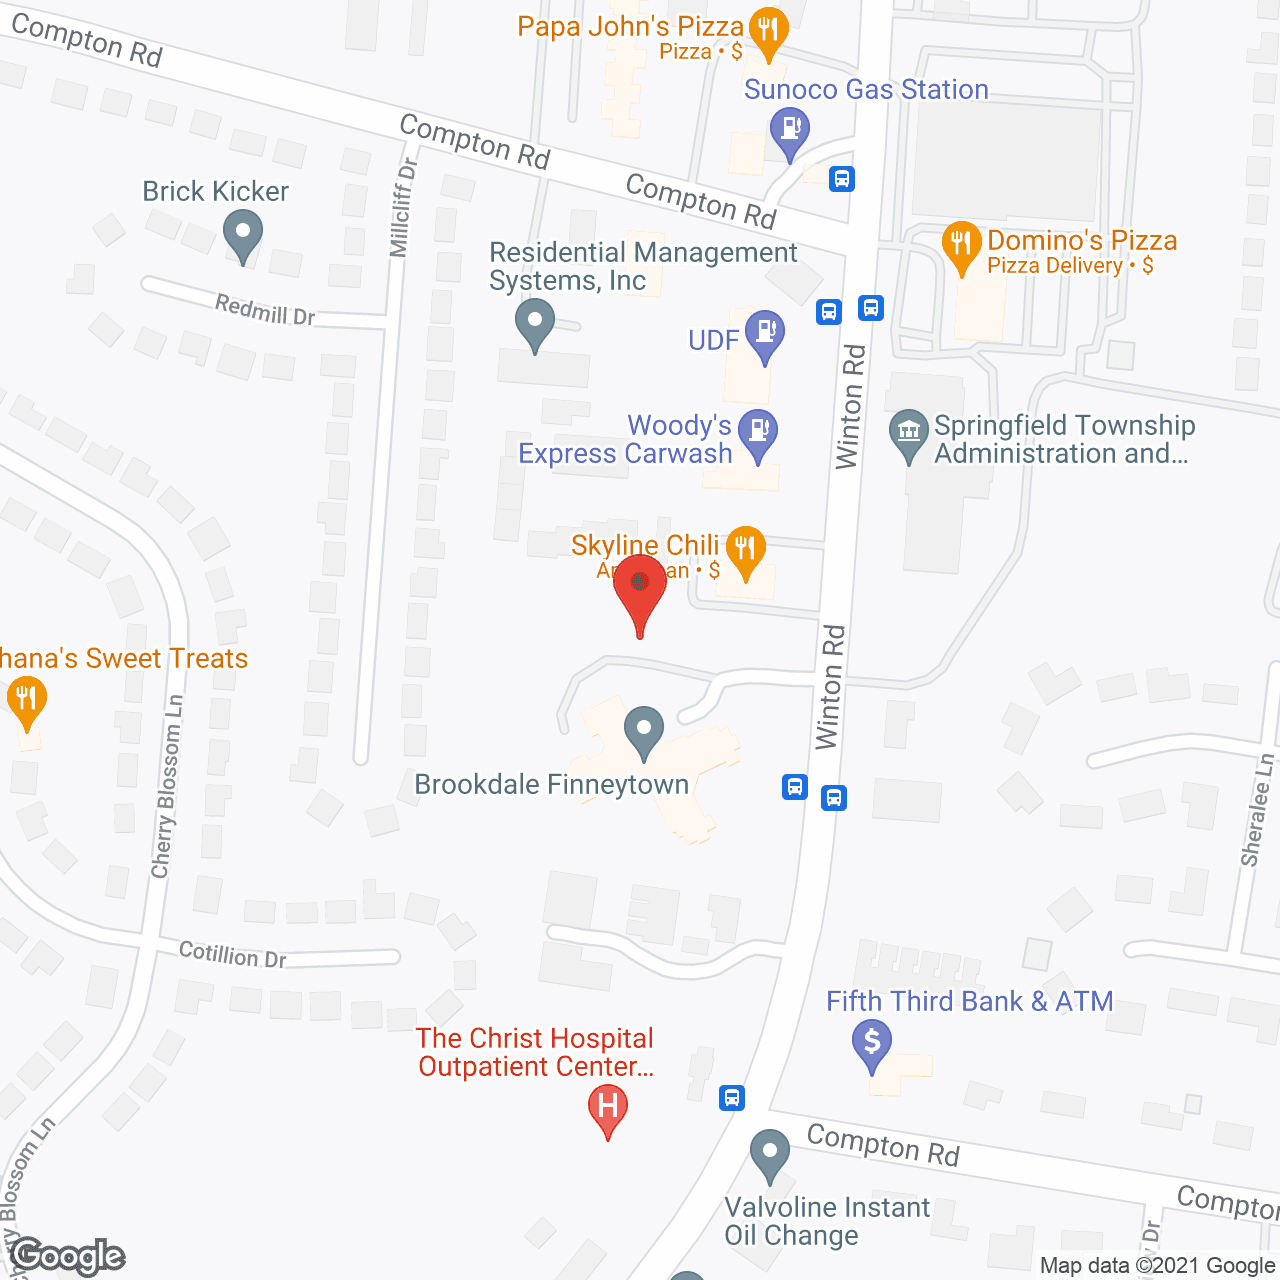 Brookdale Finneytown (Offering HealthPlus) in google map